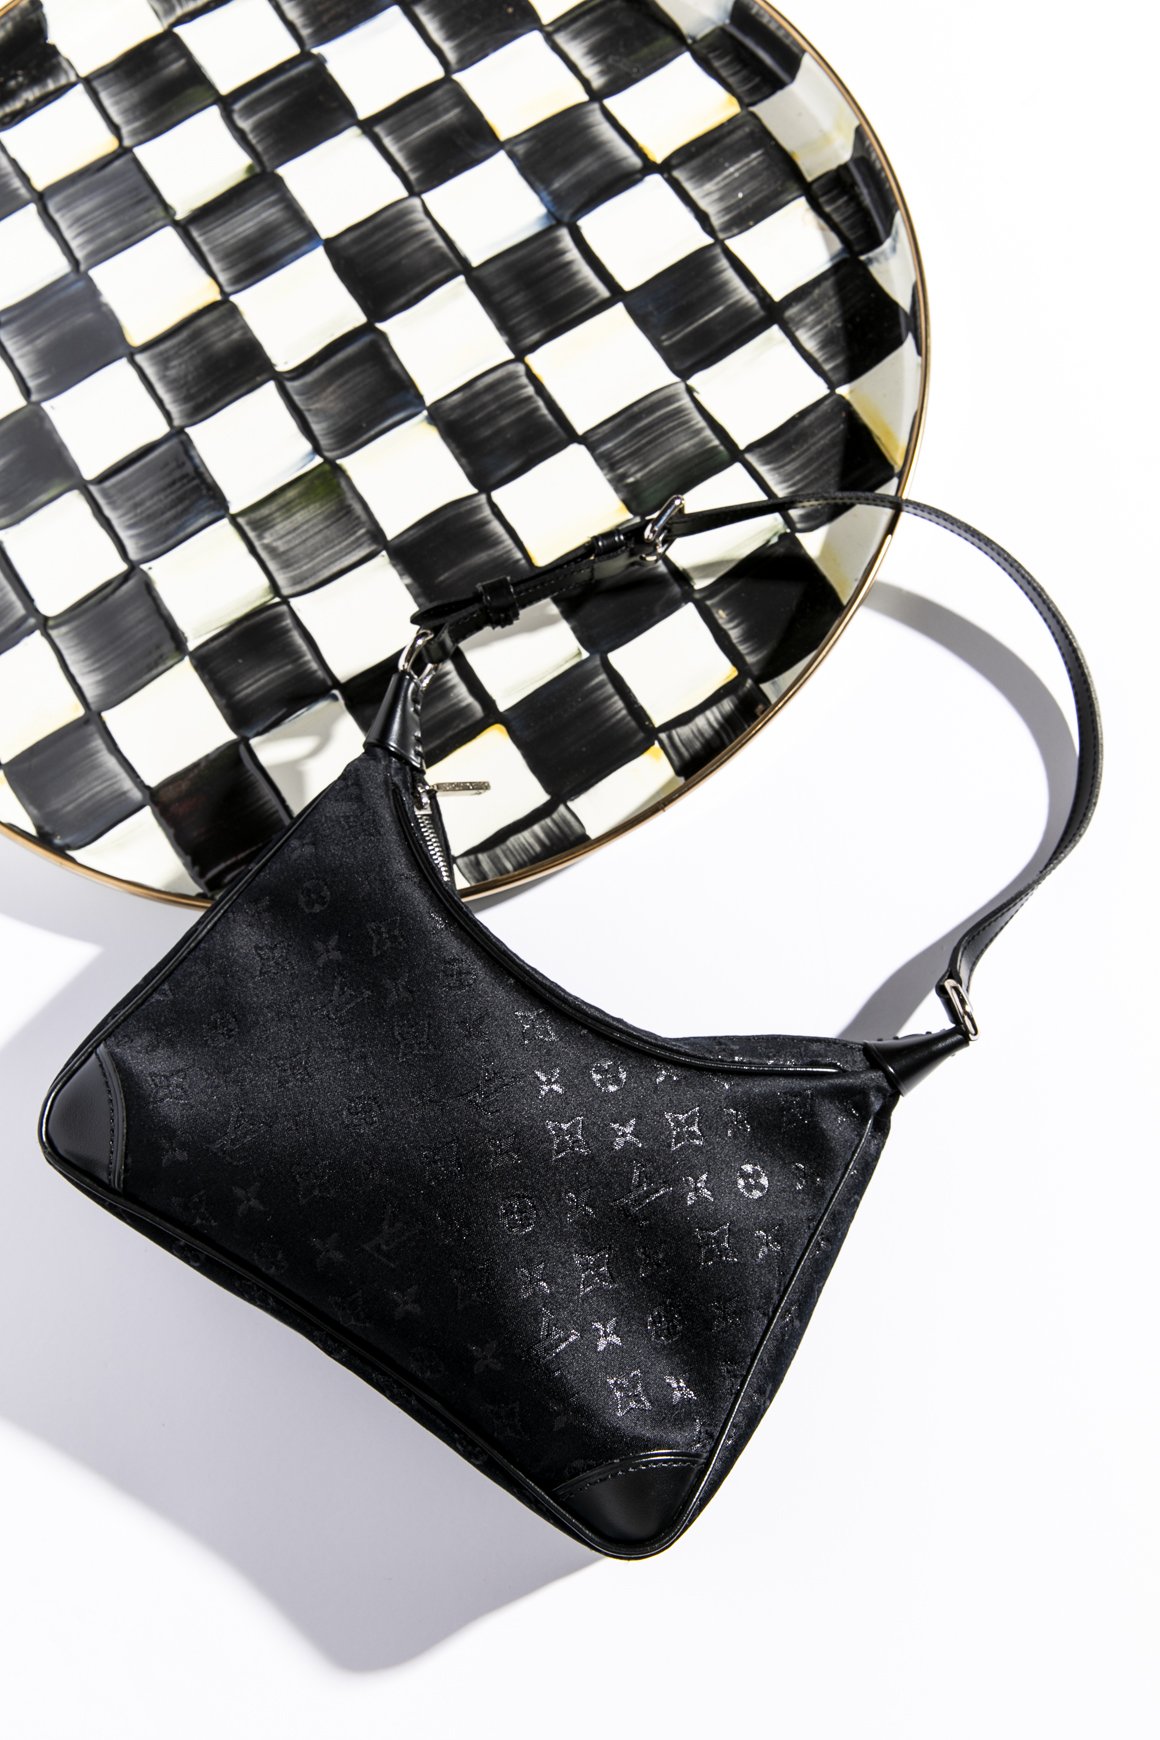 Black Louis Vuitton Purses - 1,202 For Sale on 1stDibs